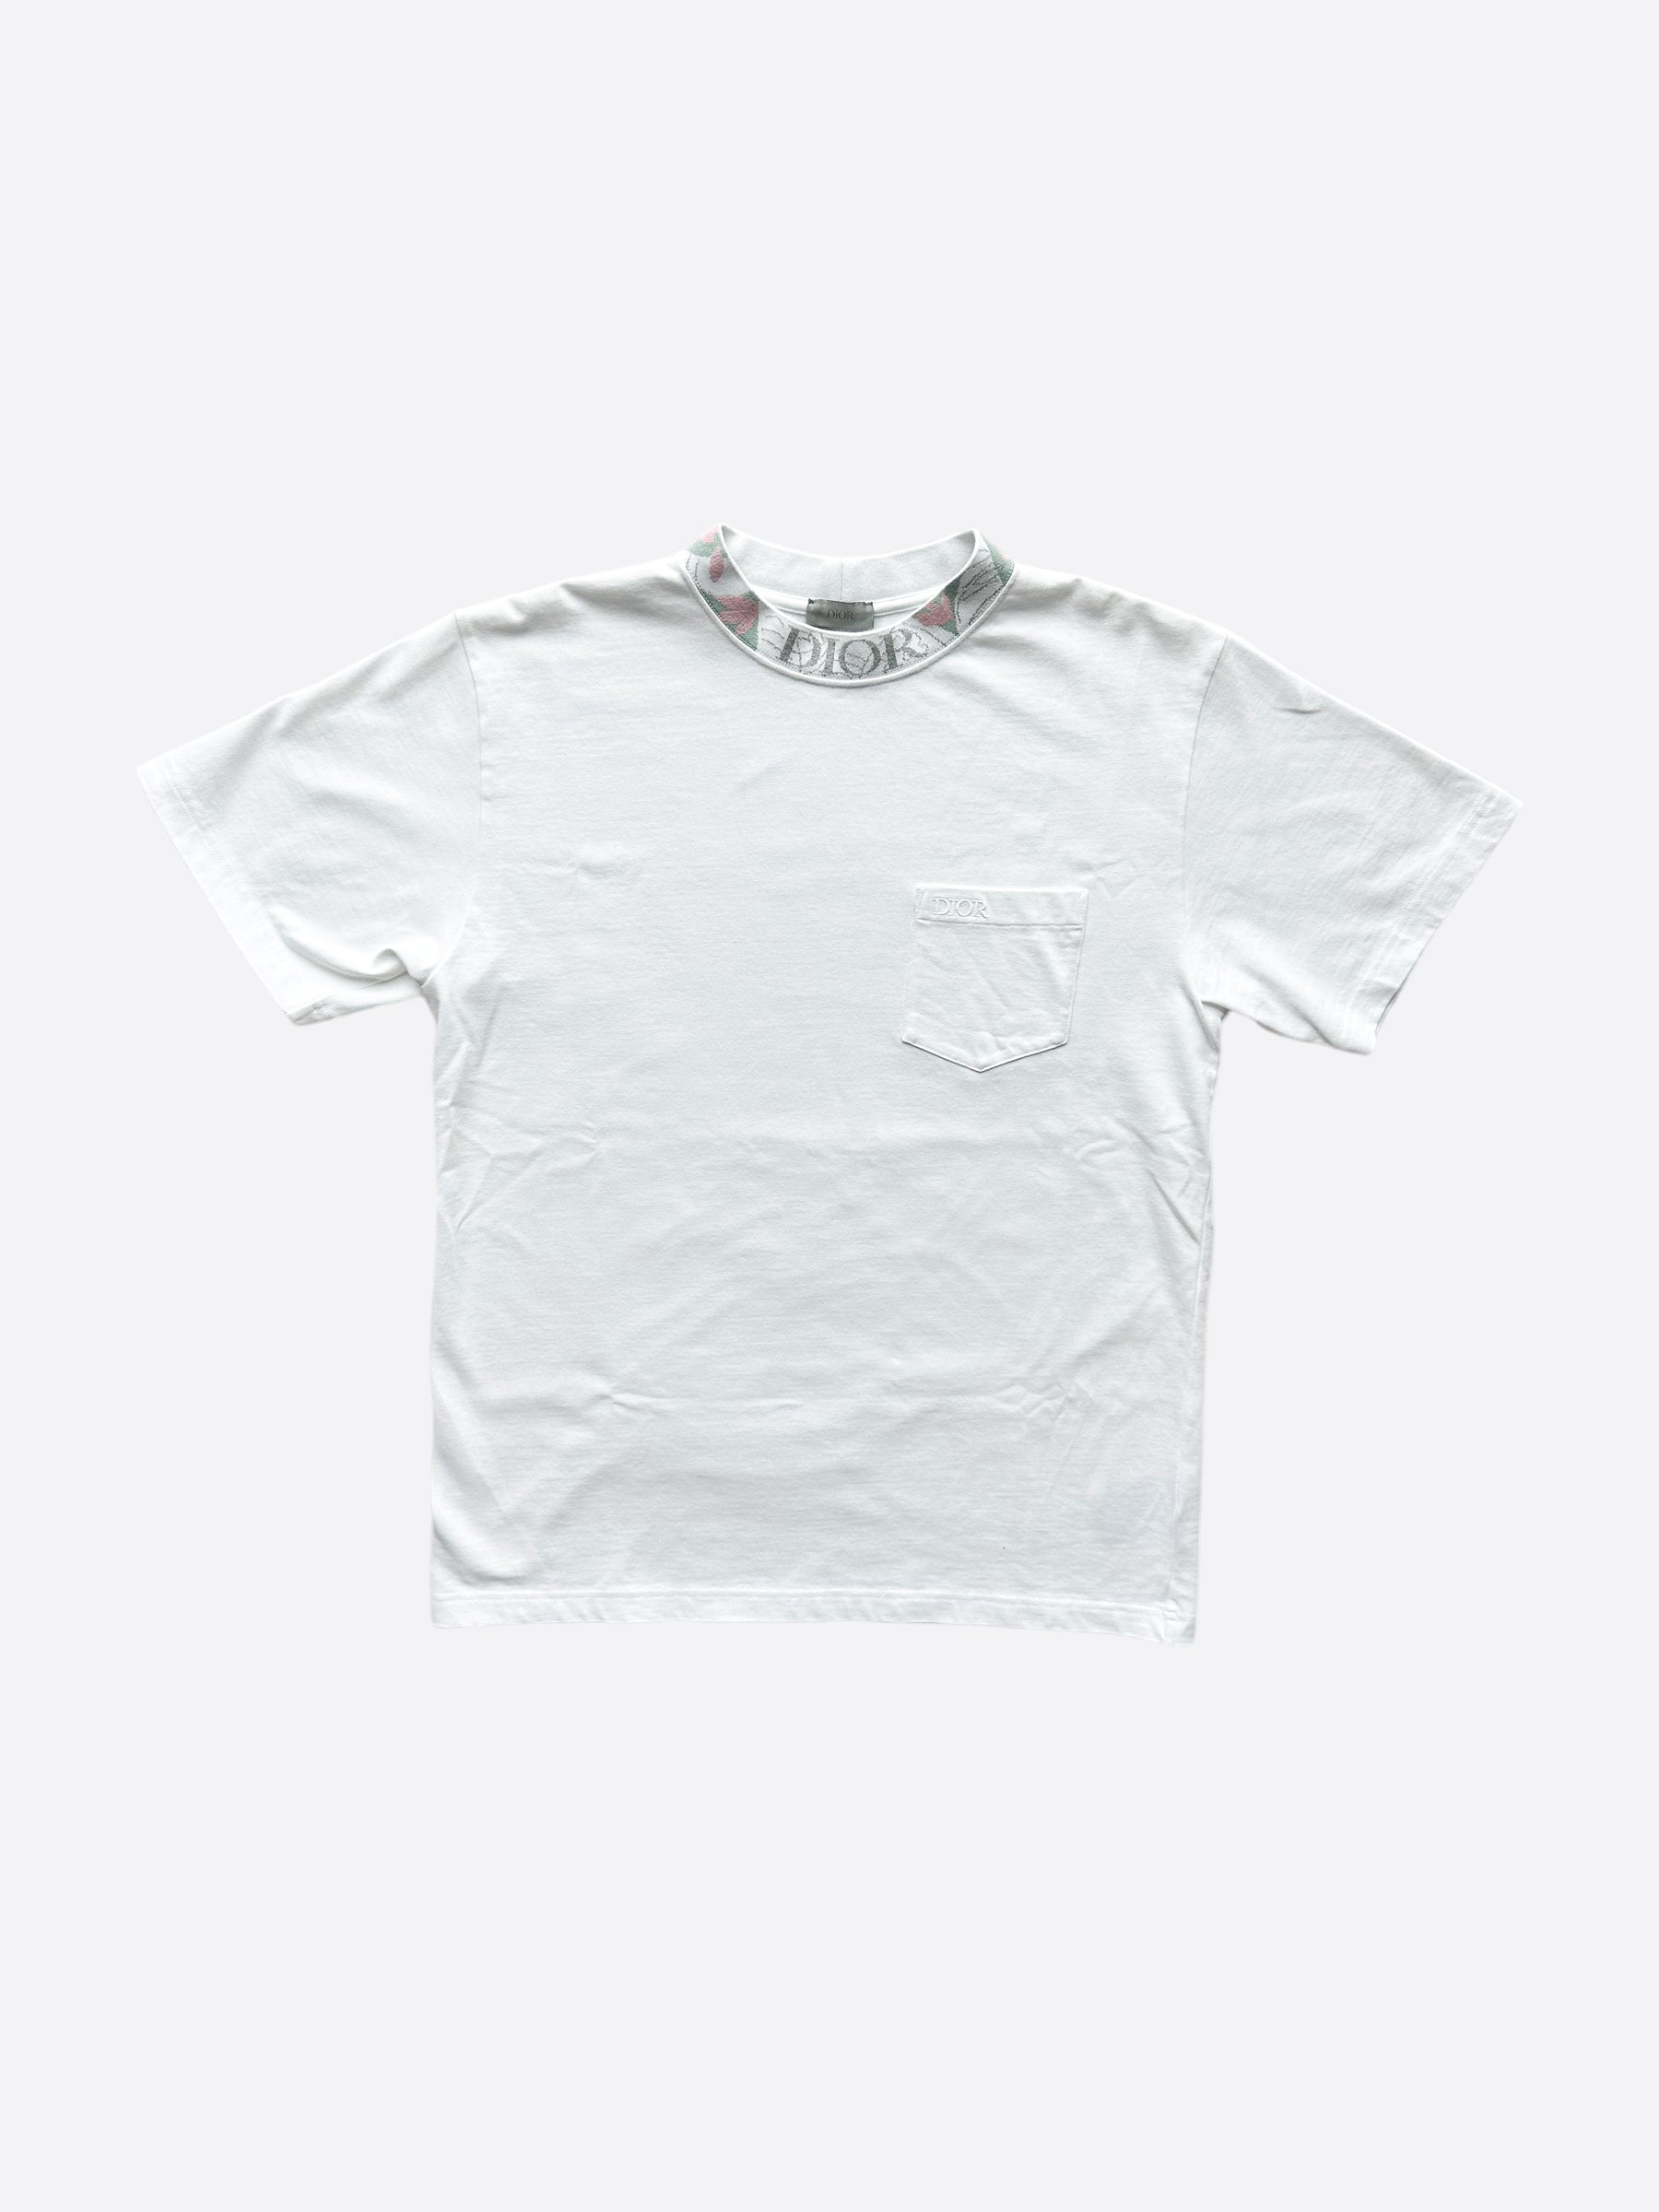 Dior Homme White Logo Embroidered Cotton Crewneck T-Shirt L Dior